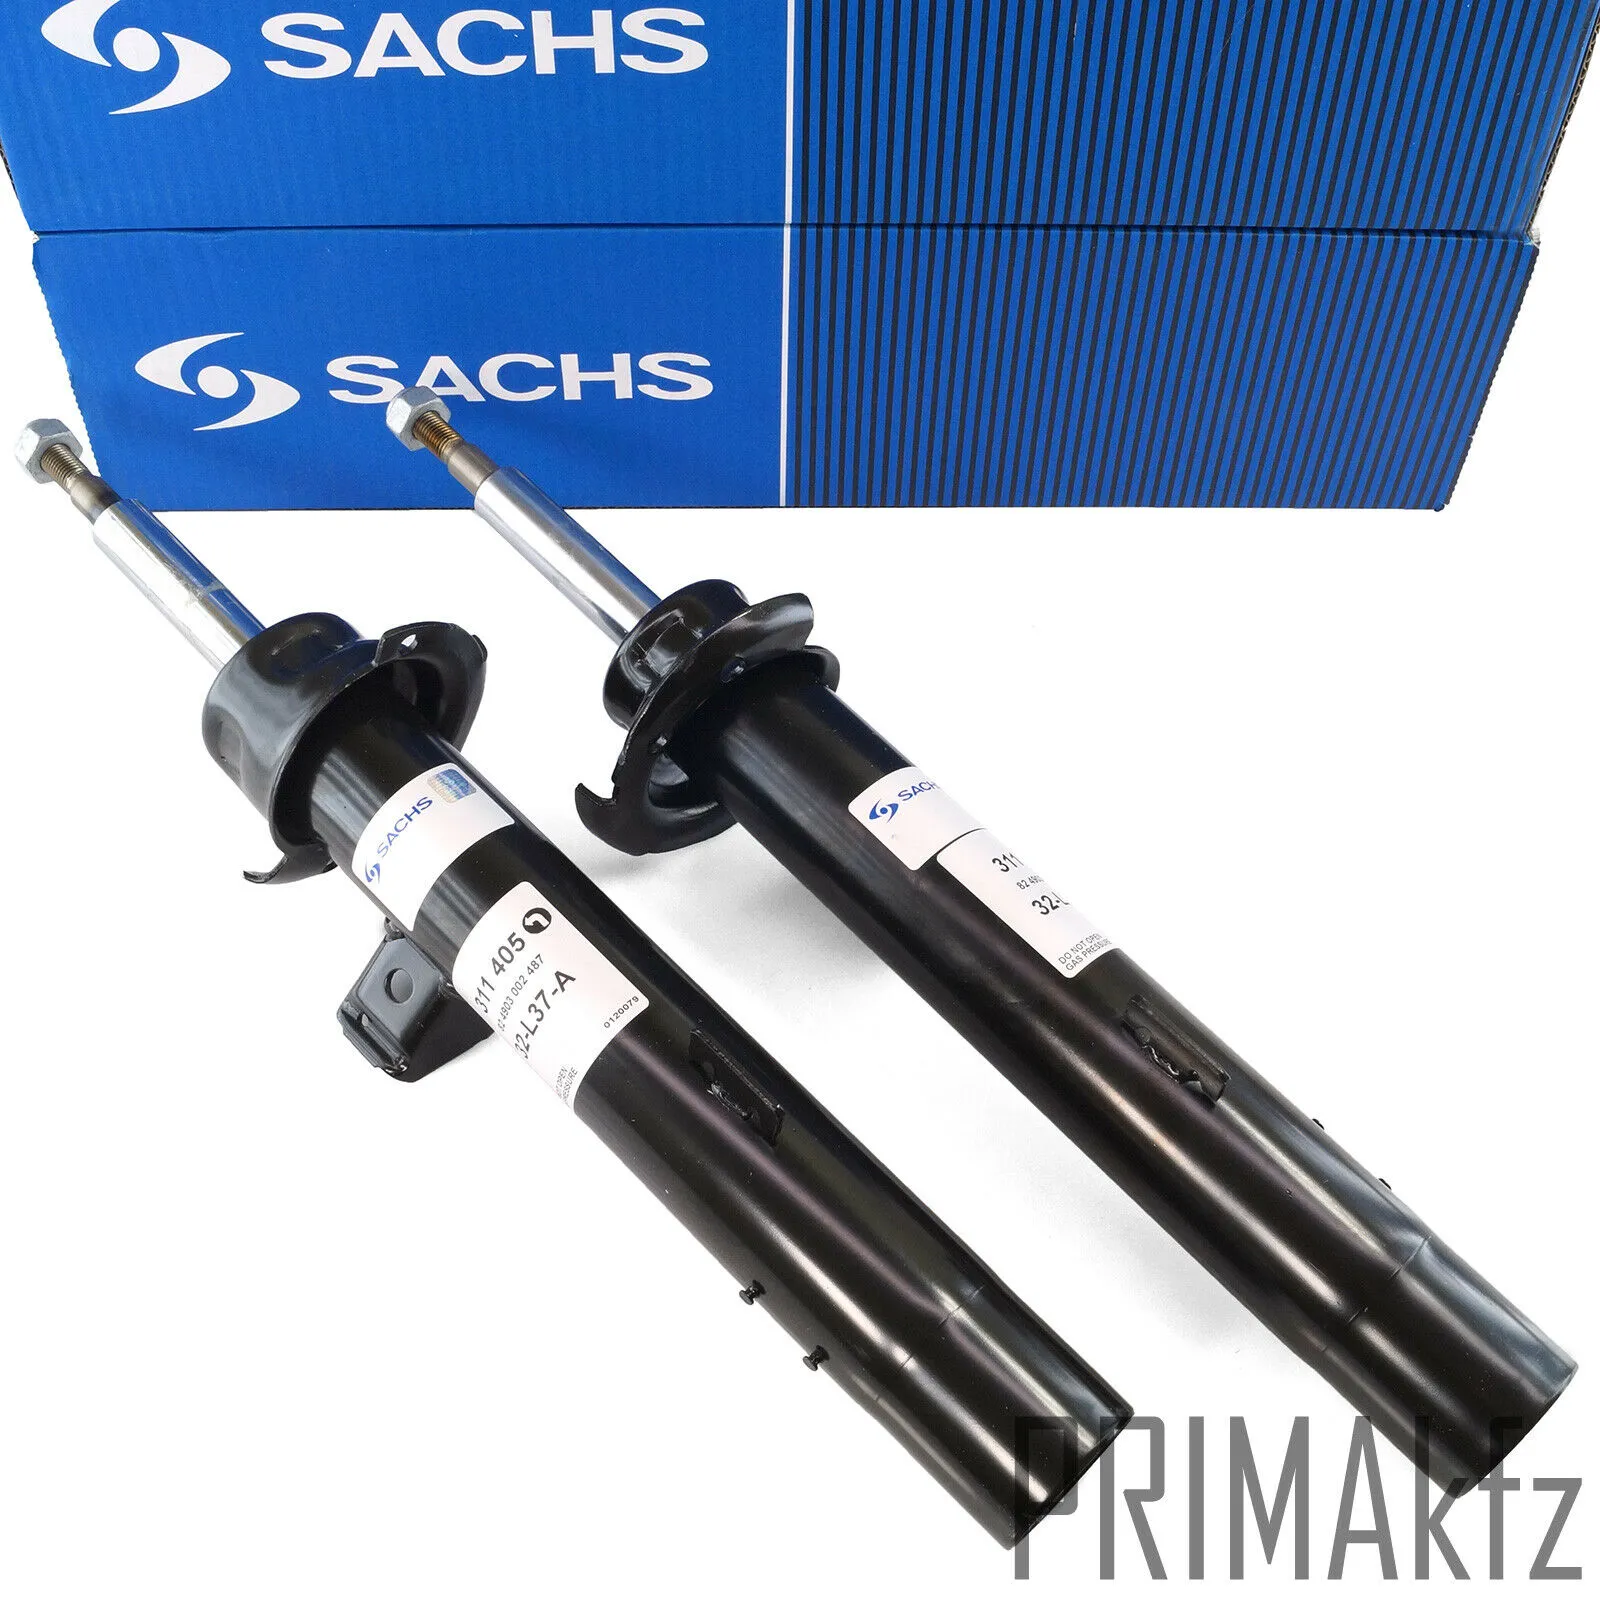 2x SACHS M-Technik Stoßdämpfer vorne für BMW 3er E90 E91 E92 E93